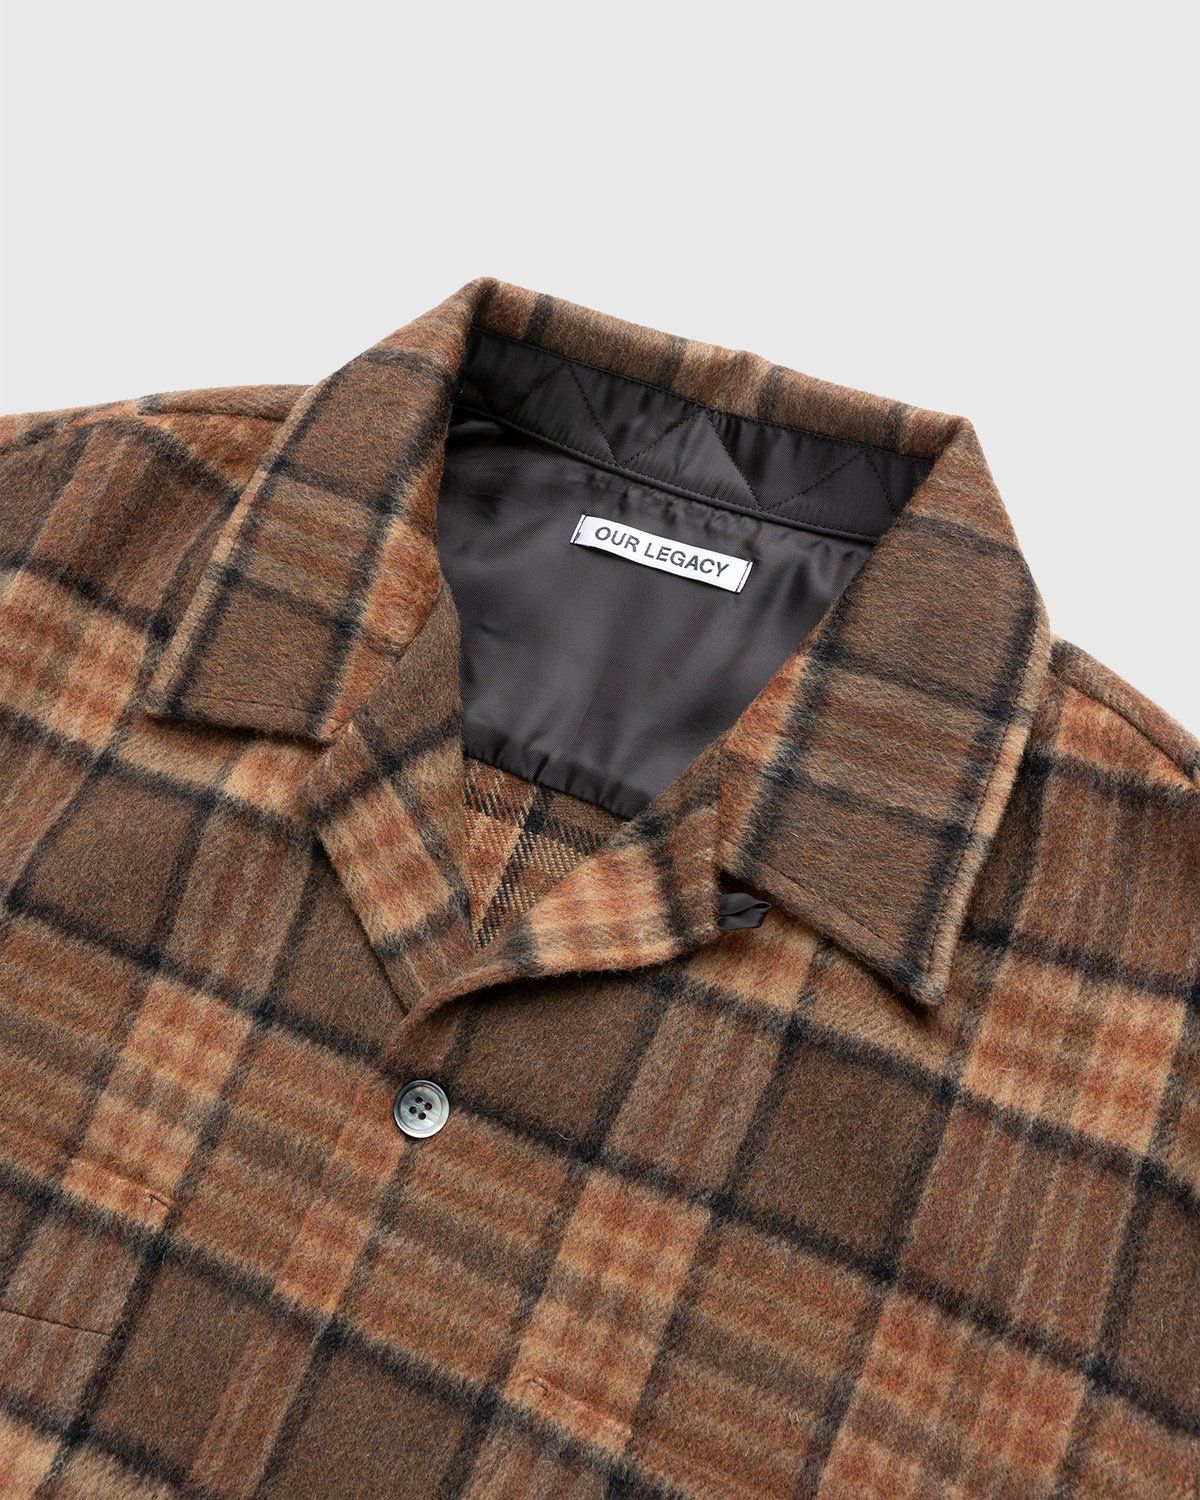 Our Legacy – Heusen Shirt Fox Brown Check - Longsleeve Shirts - Brown - Image 3